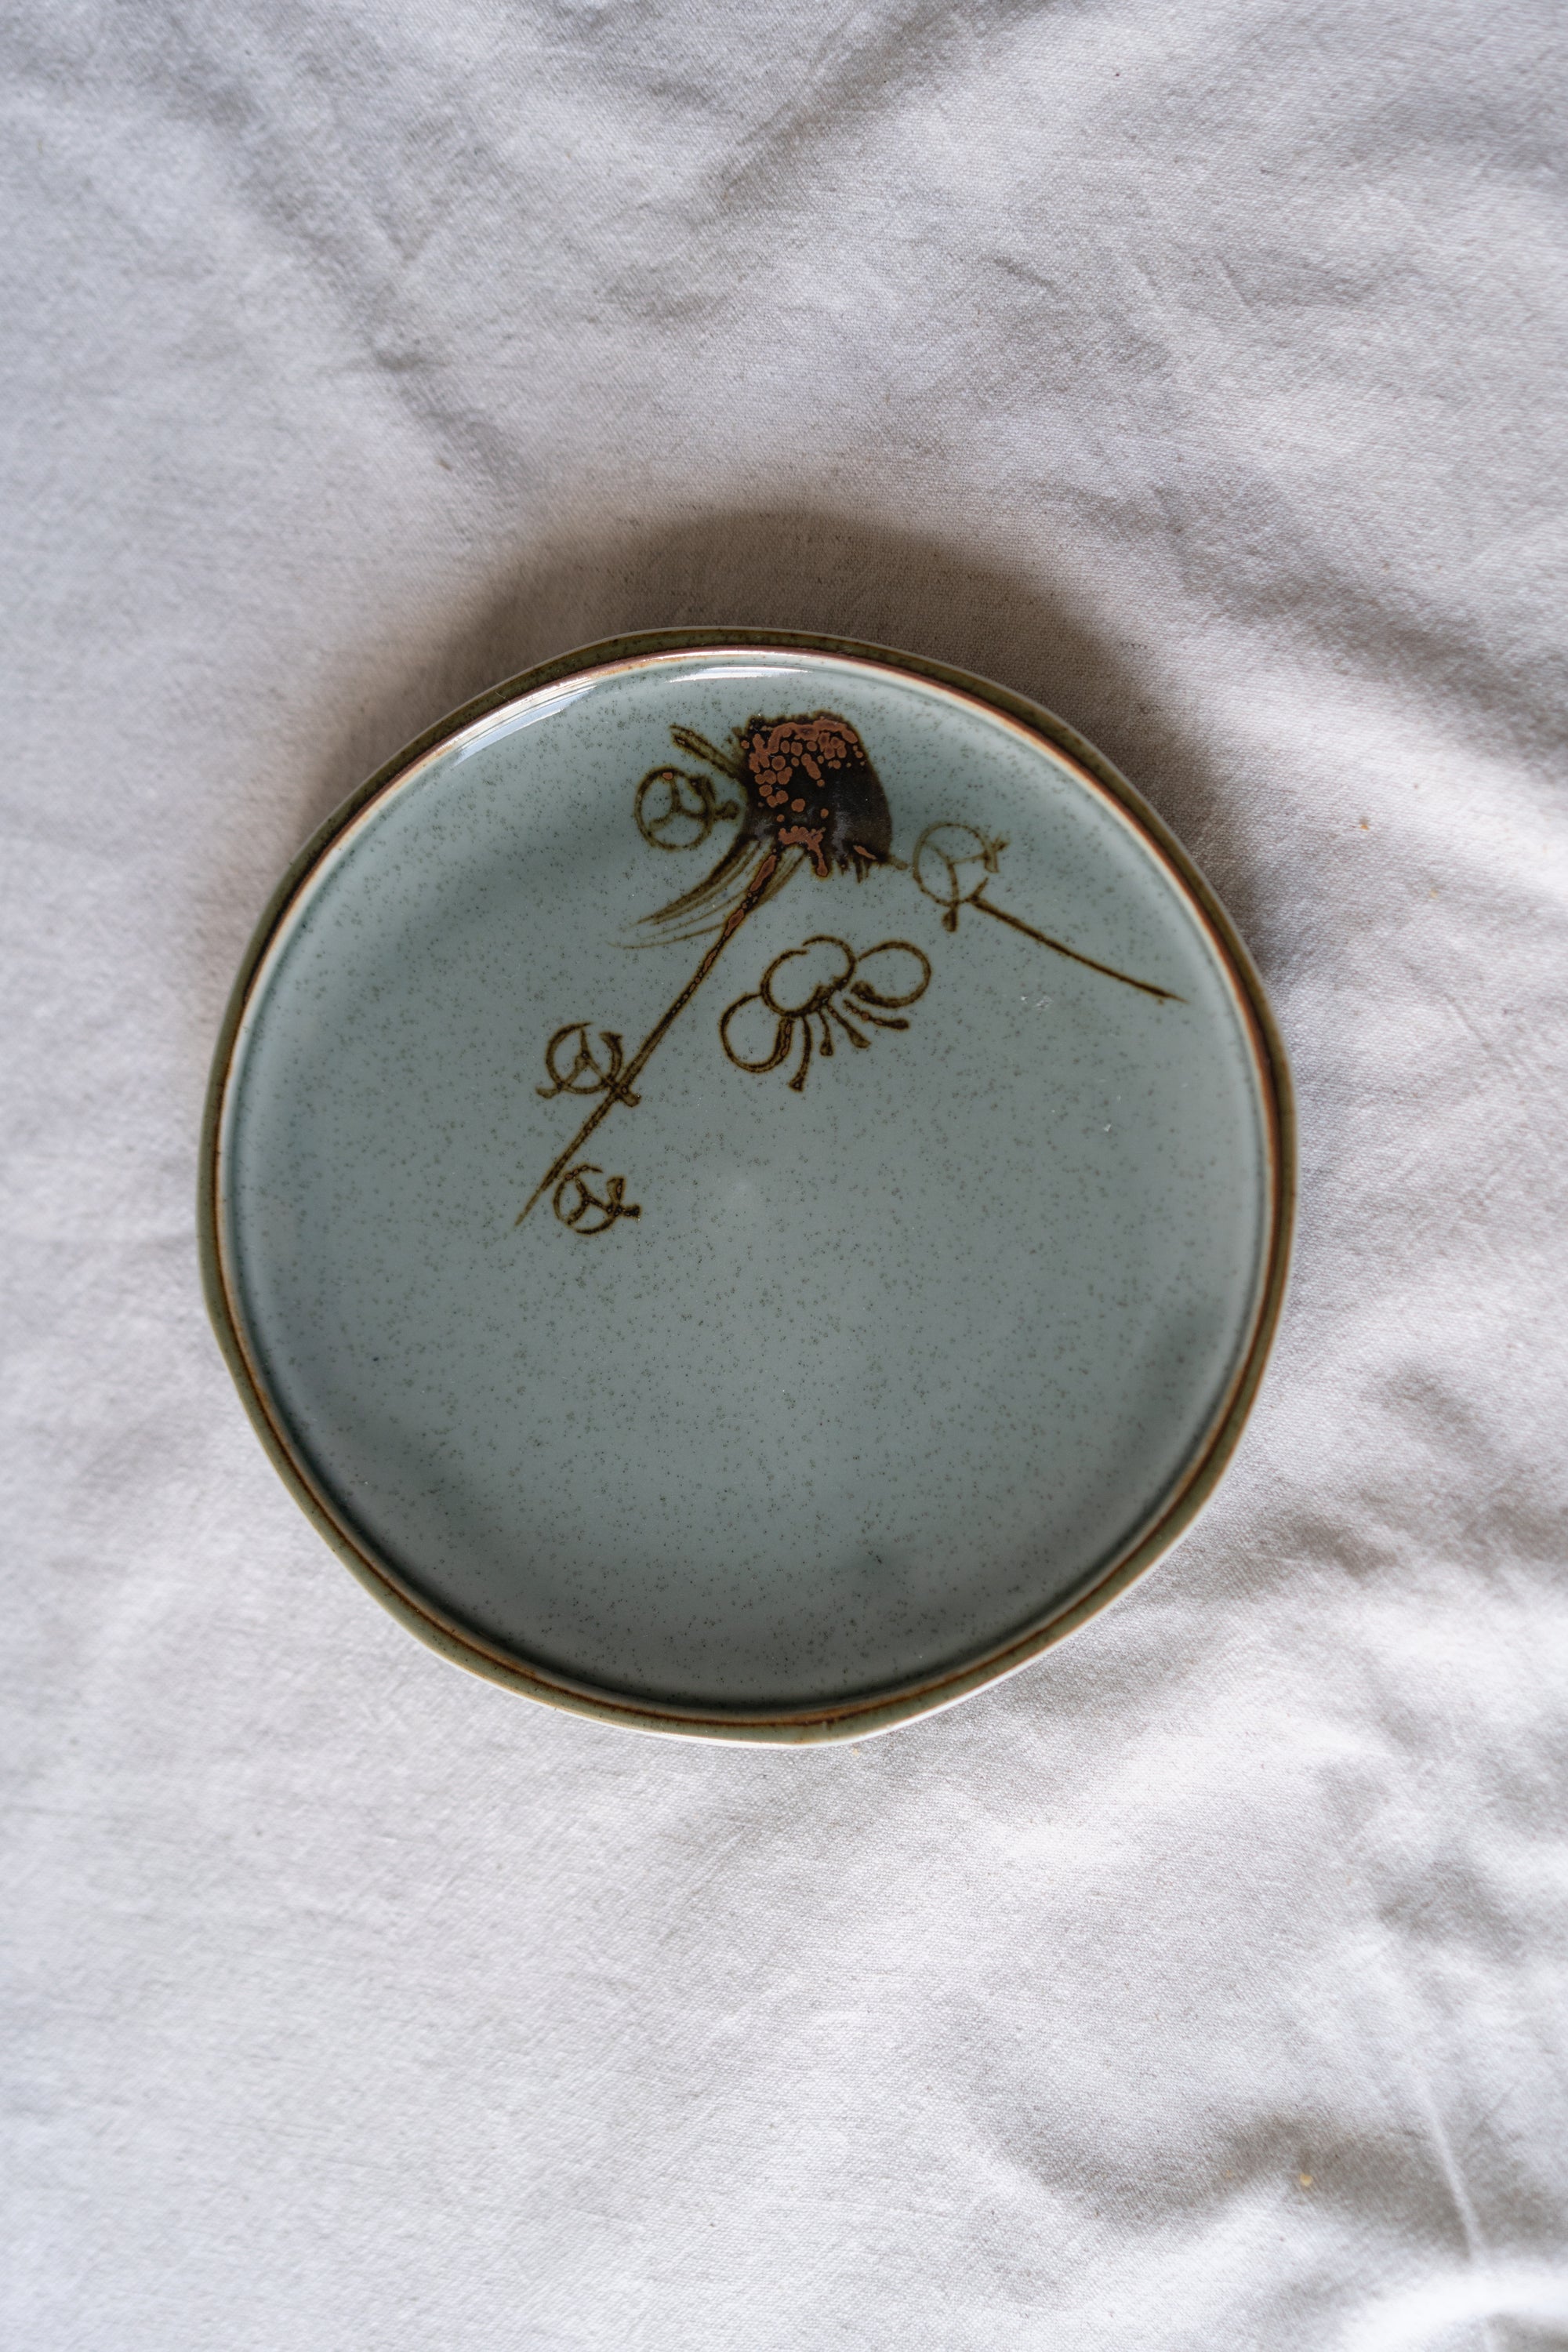 Hand-painted Japanese Ceramic Dinner Plate